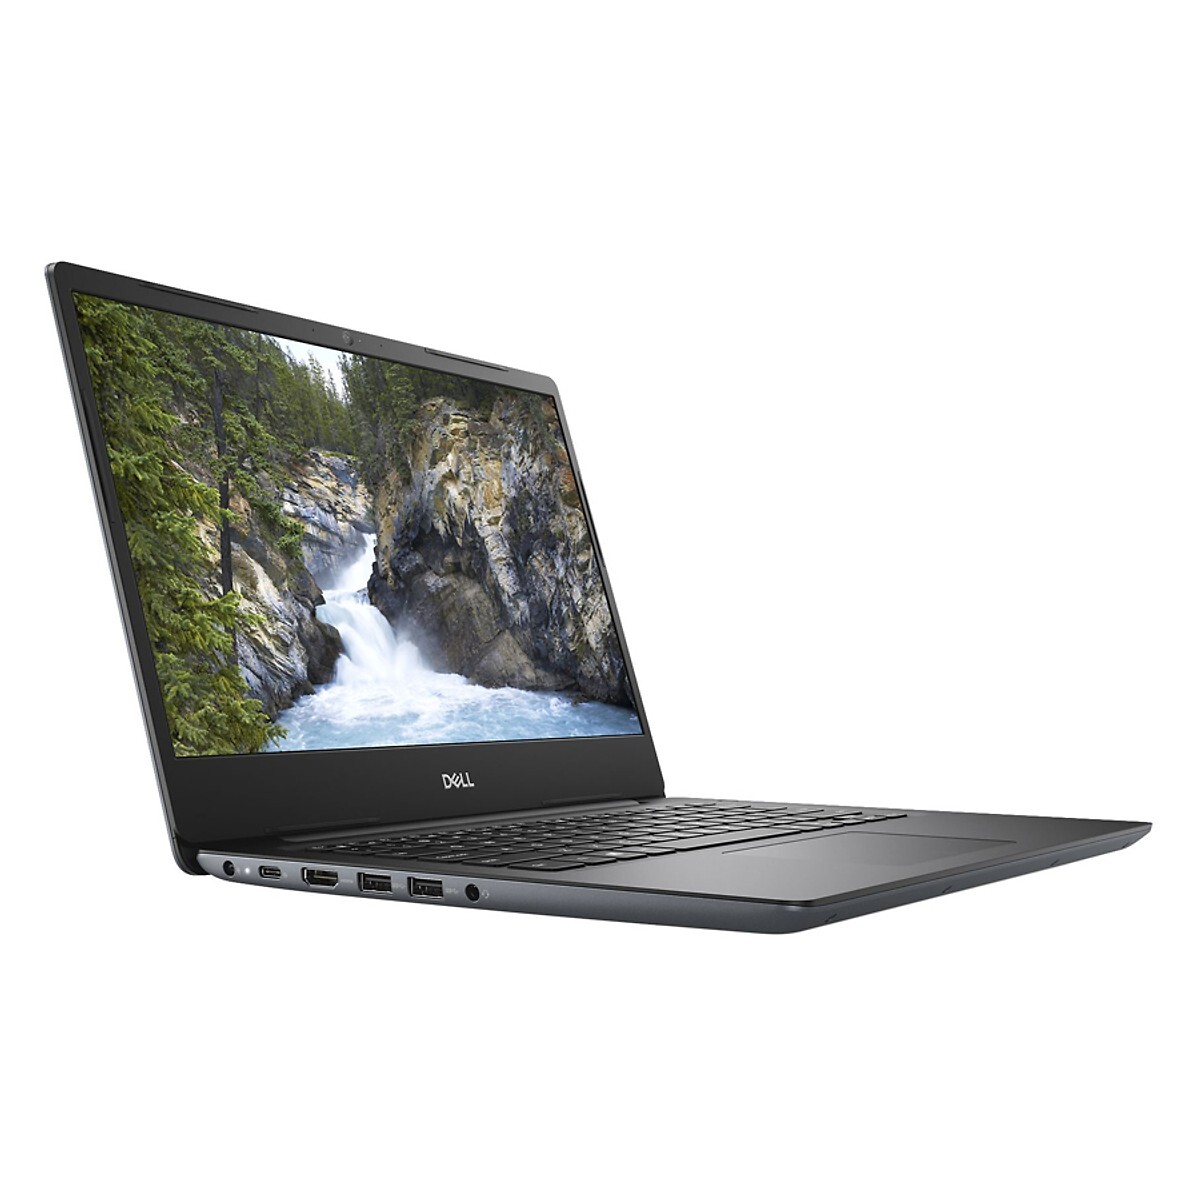 Laptop Dell Vostro 5481A P92G001 - Intel core i5-8265U, 4GB RAM, HDD 1TB, Intel UHD Graphics 620, 14 inch